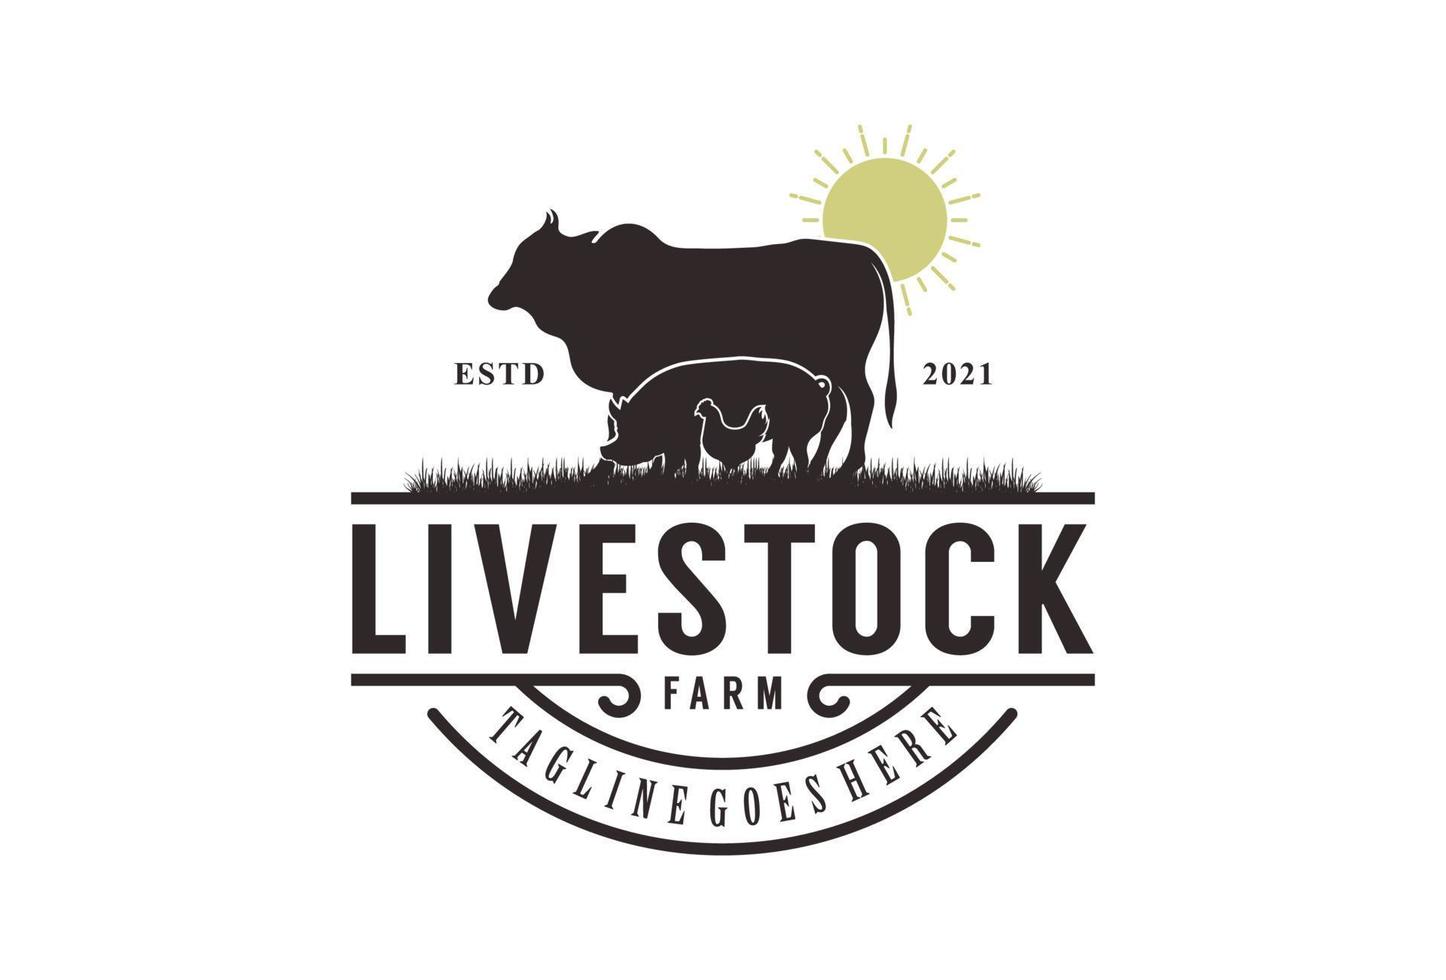 Retro Vintage Livestock logo design. Cow, pig and chicken vector illustration